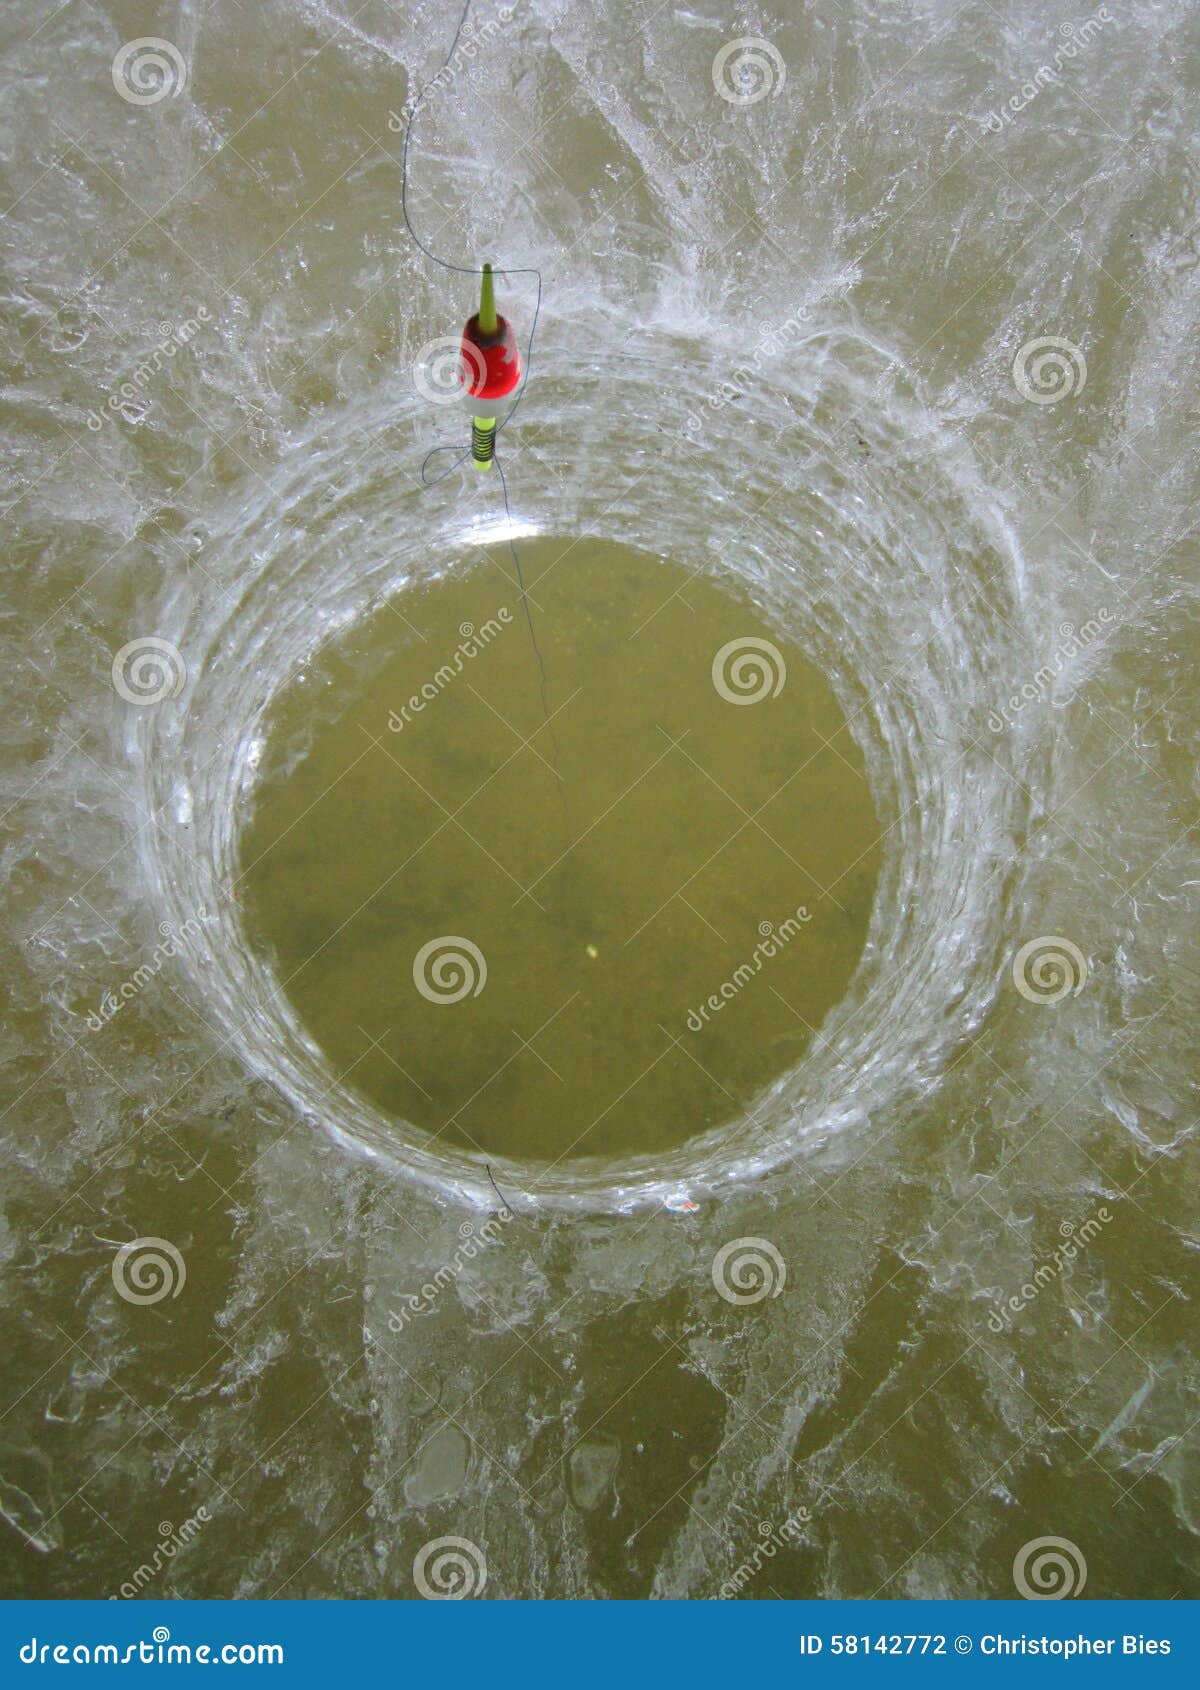 https://thumbs.dreamstime.com/z/bobber-hole-ice-fishing-cork-floating-water-58142772.jpg